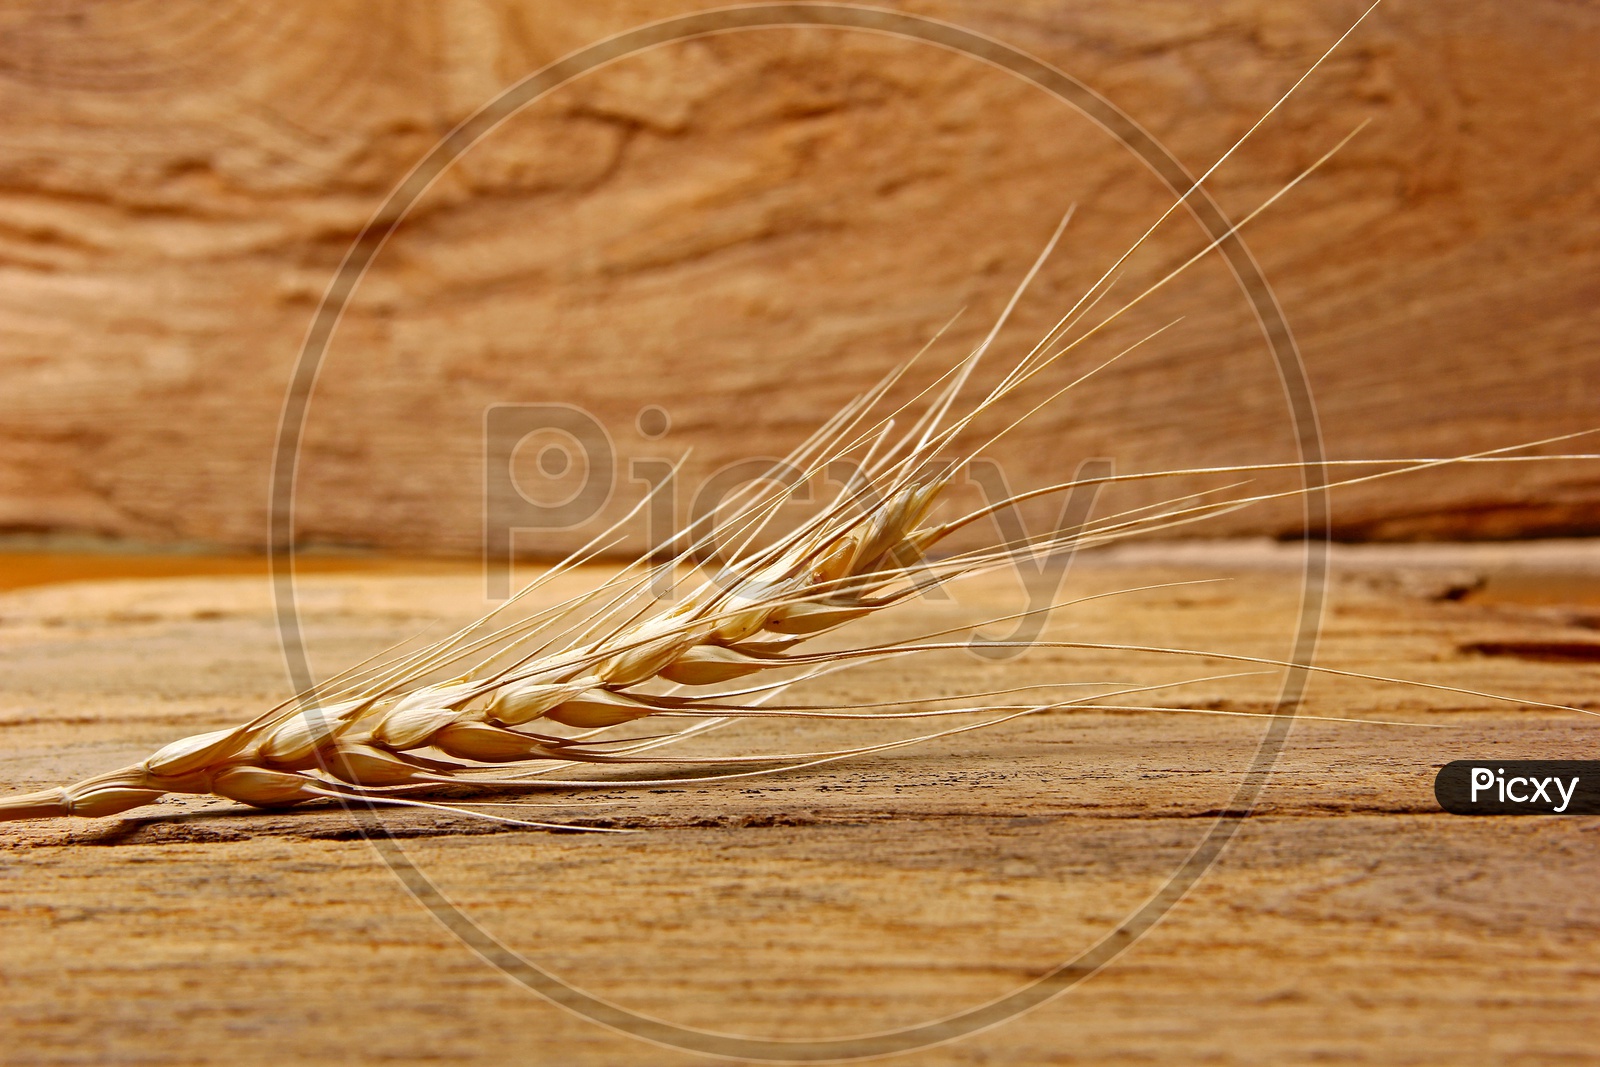 Wheat Rye / Wheat / Wheat Grains / Wheat Grains Closeup Shot / Golden Colour Wheat Grains / Wheat Yeild / Ceral Grain